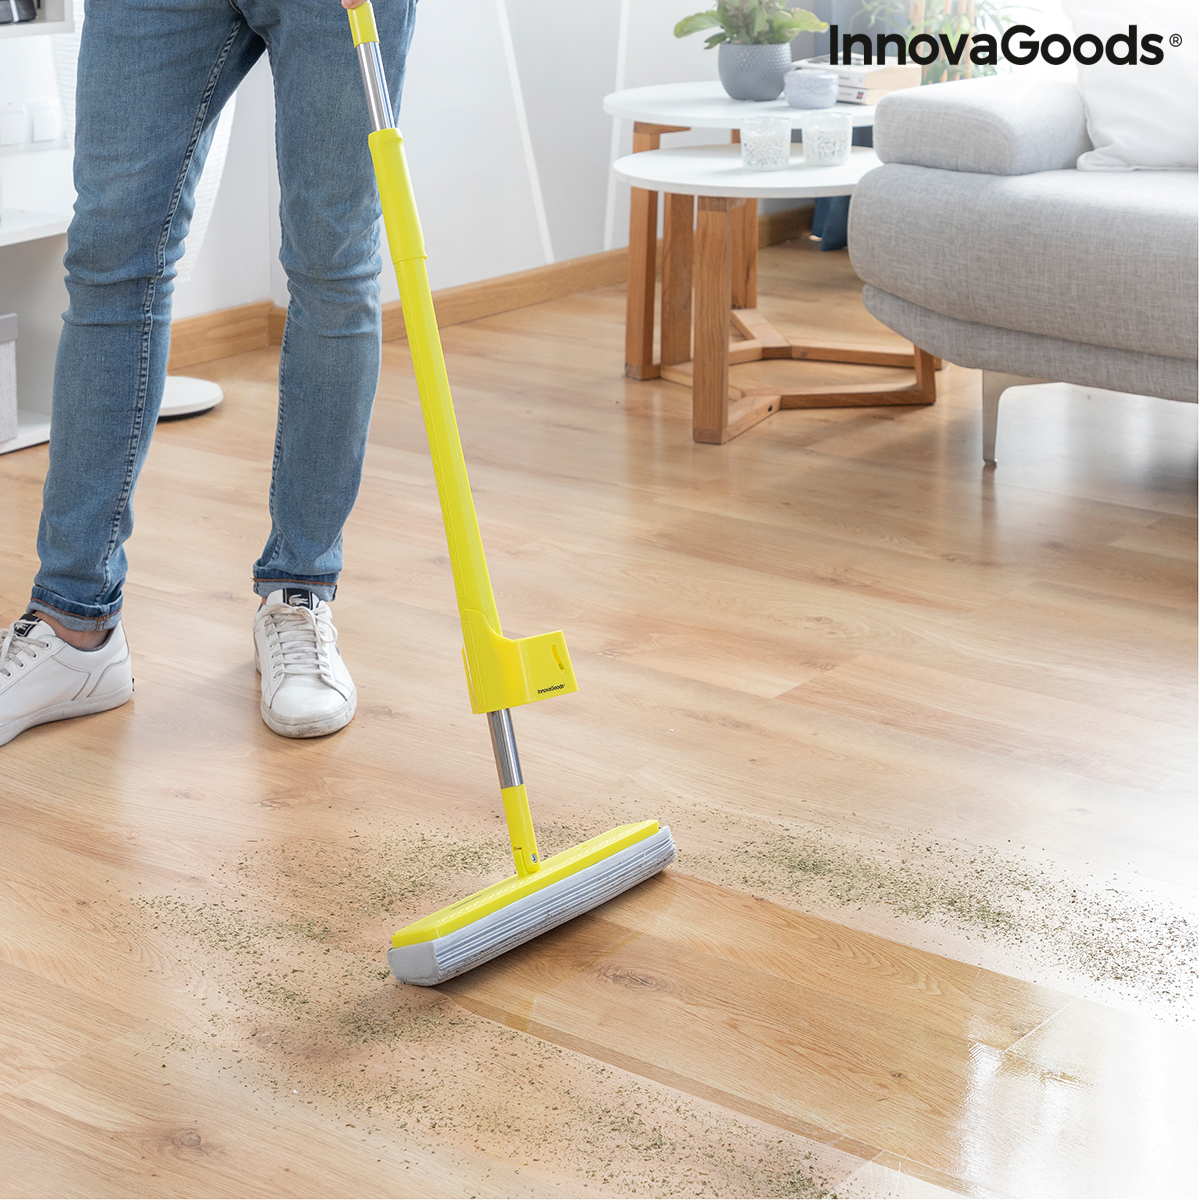 2-in-1 Dust Mop-Floor Mop with Self-wringing Sponge Wringop InnovaGoods